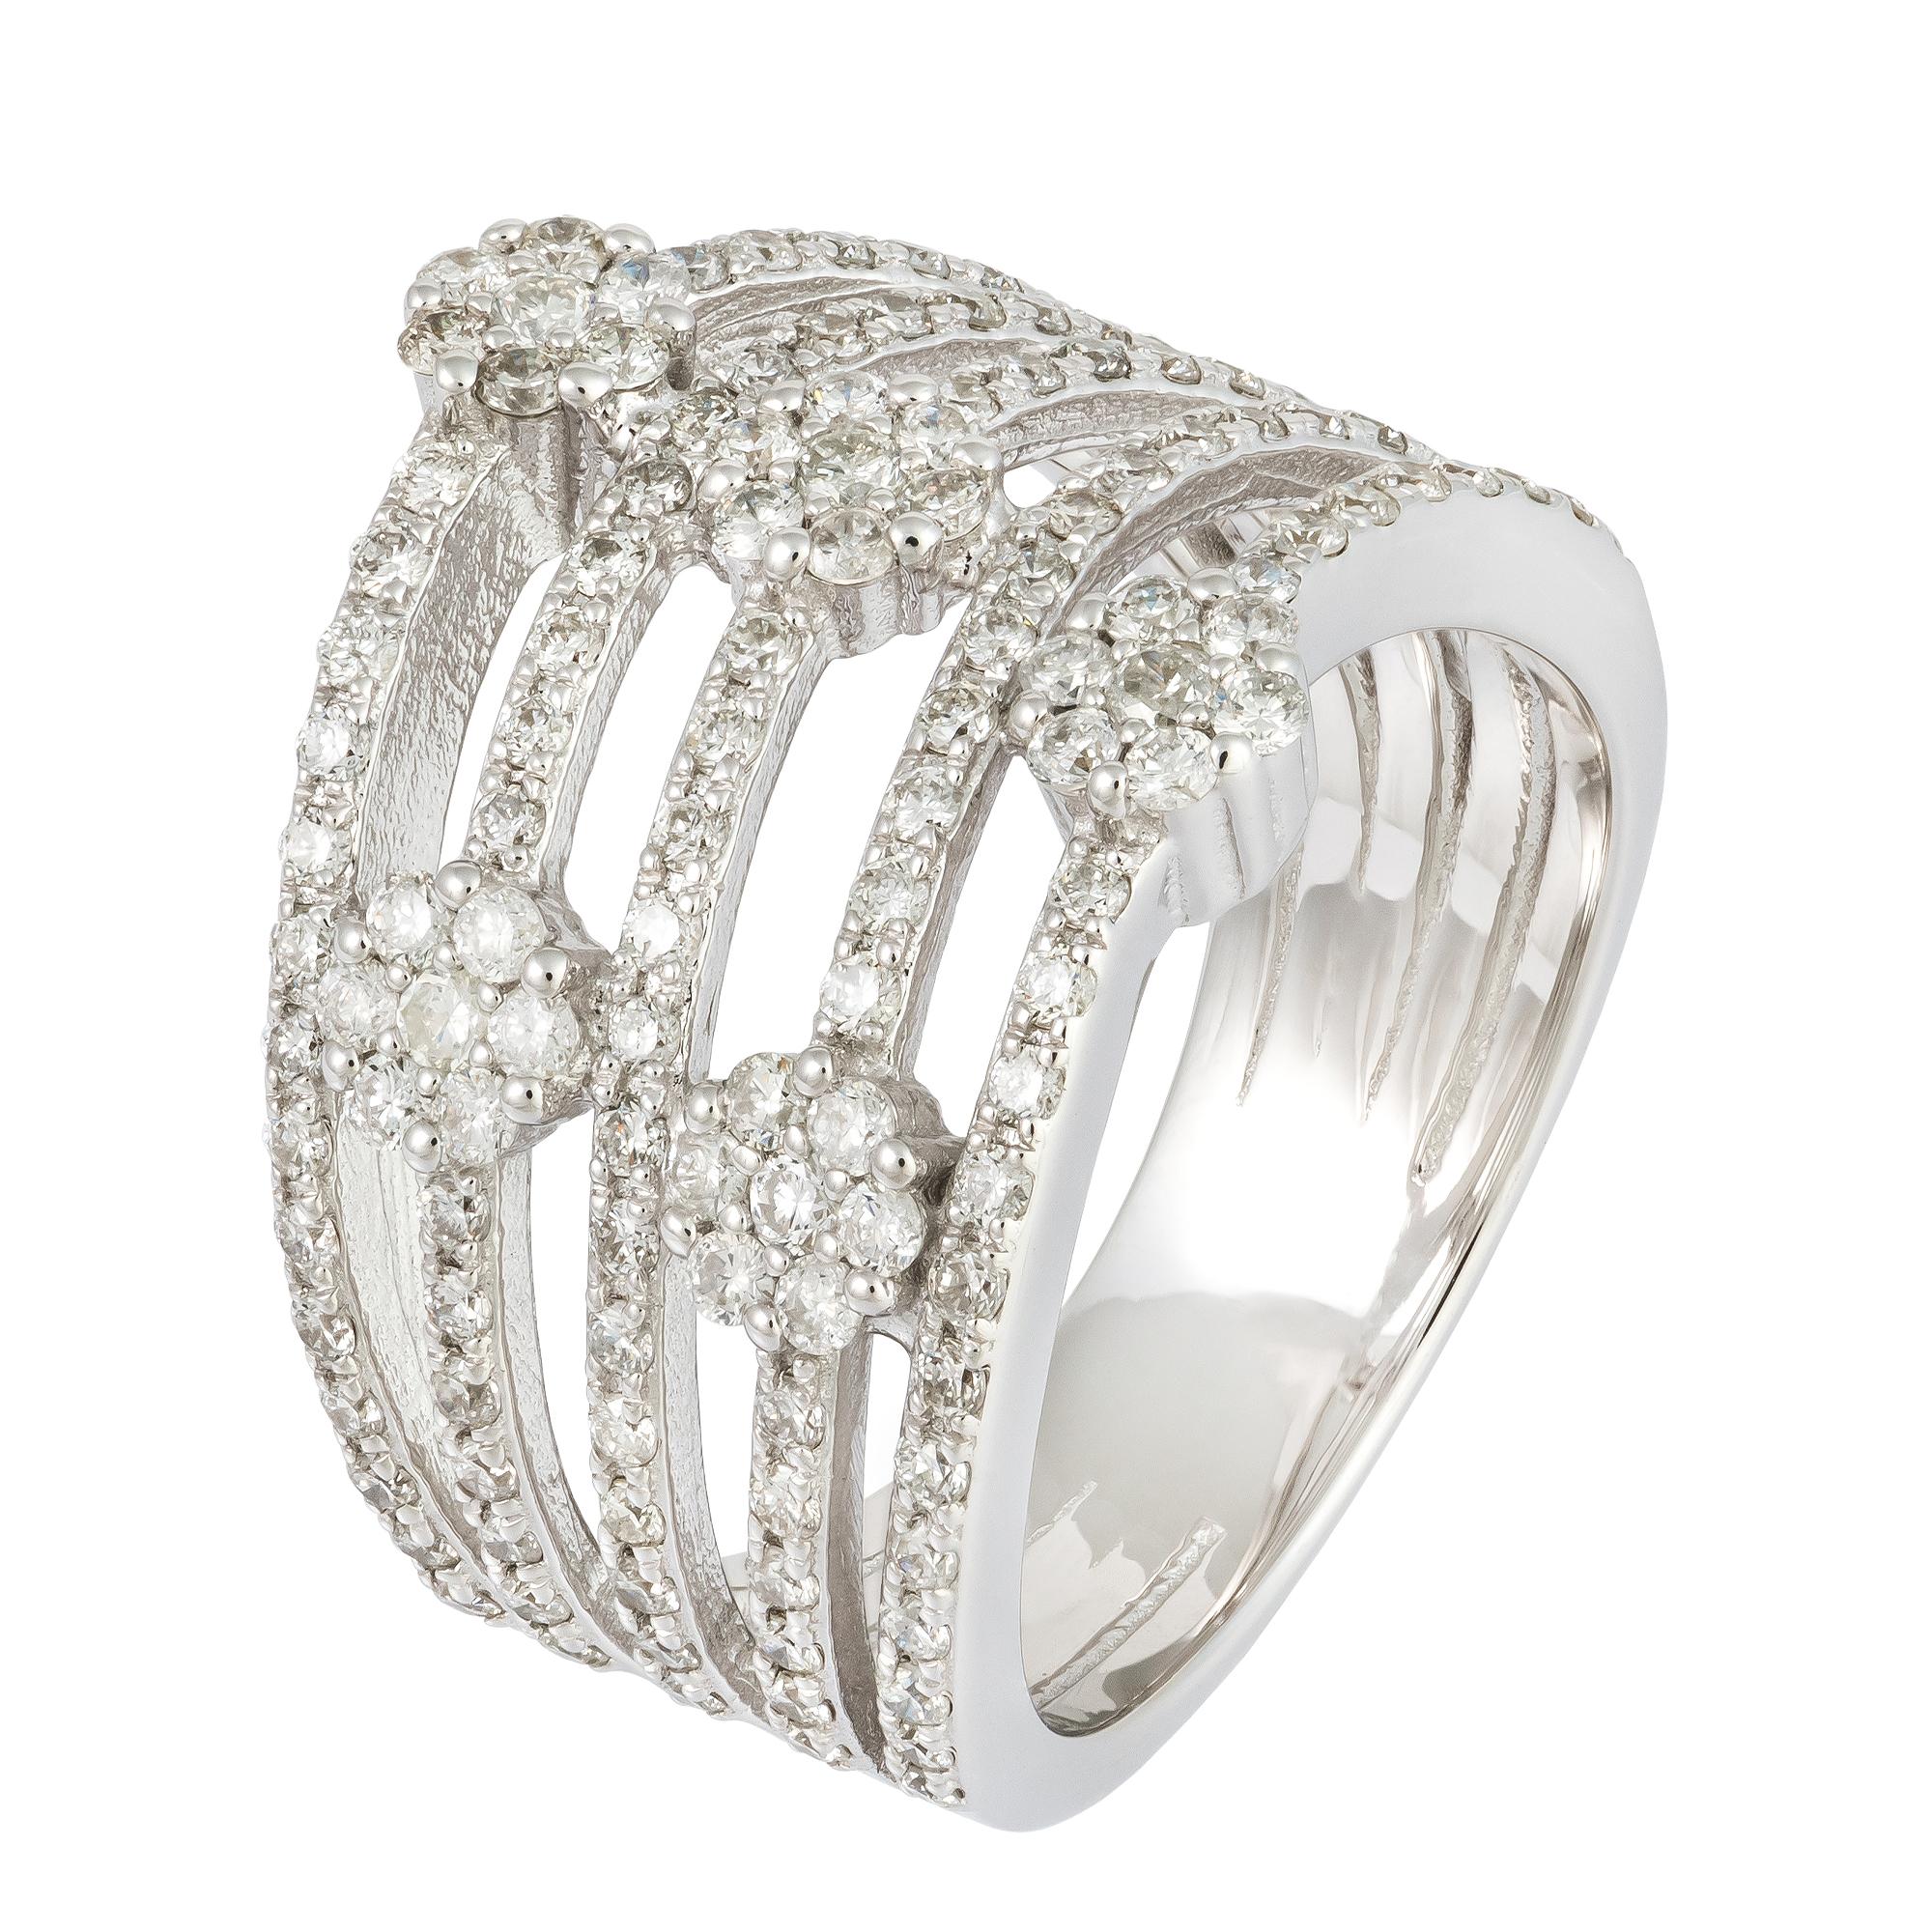 For Sale:  Spectacular White 18K Gold White Diamond Ring For Her 3